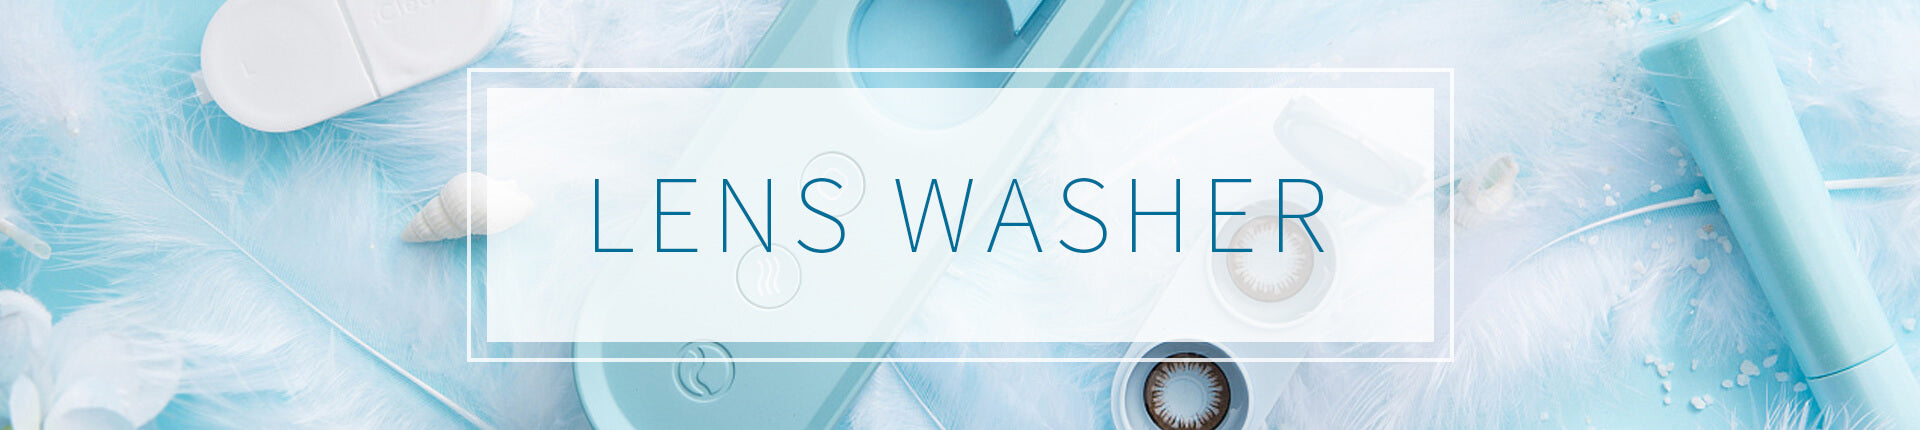 Lens Manual Washer